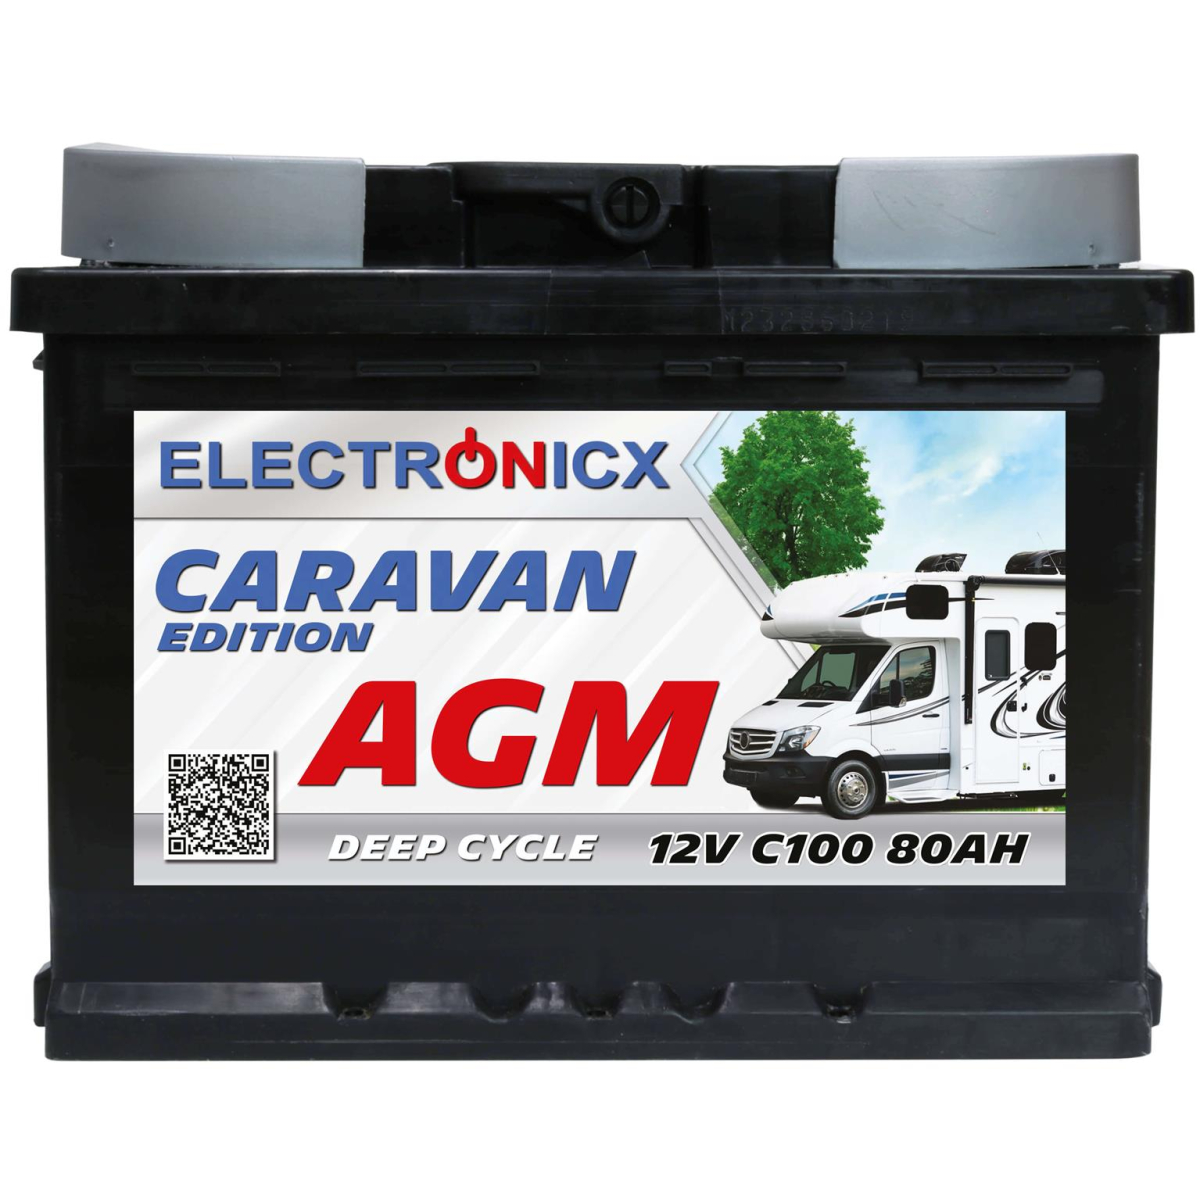 Electronicx Caravan Edition v2 battery agm 80 ah 12v motorhome boat supply..